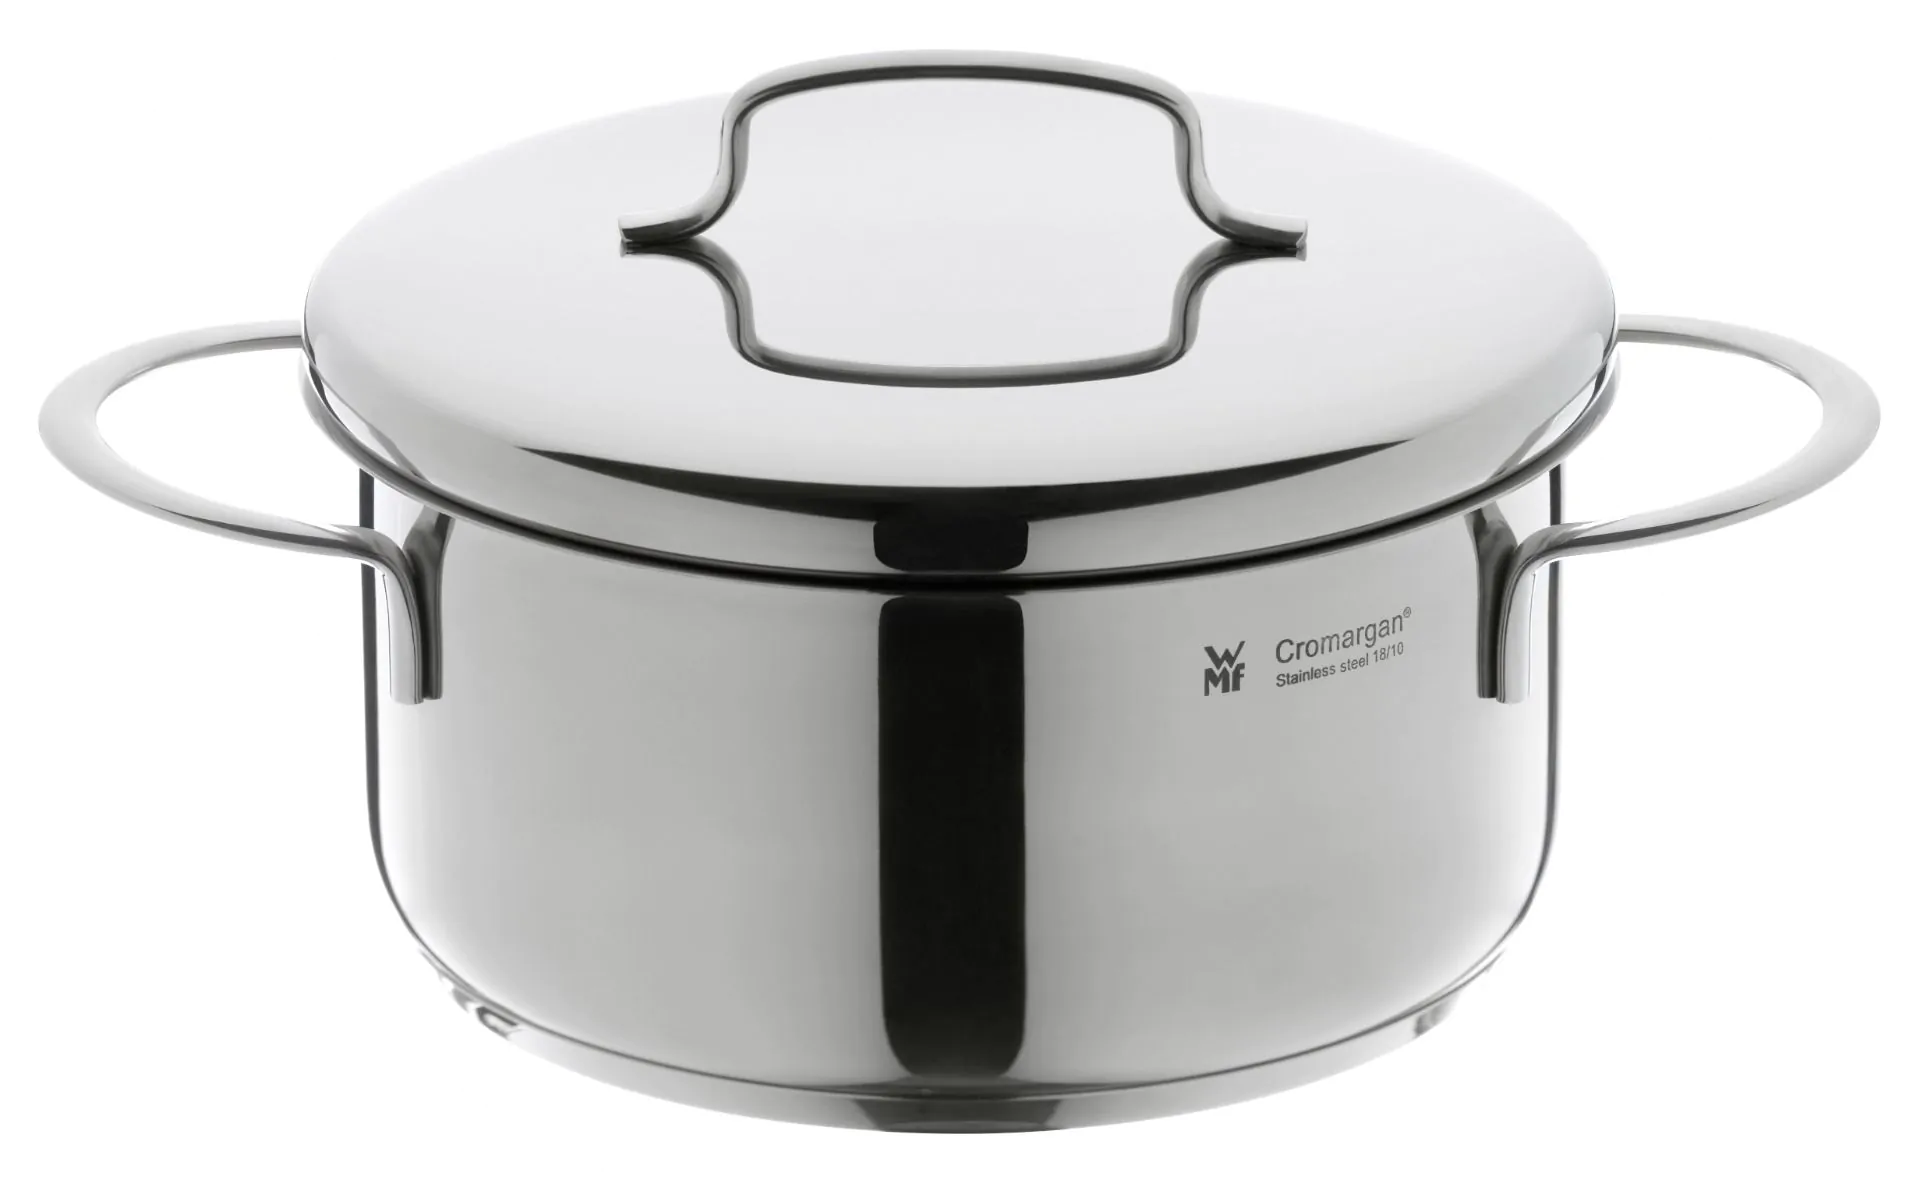 WMF Premium One 1788166040 low cooking pot, 16 cm